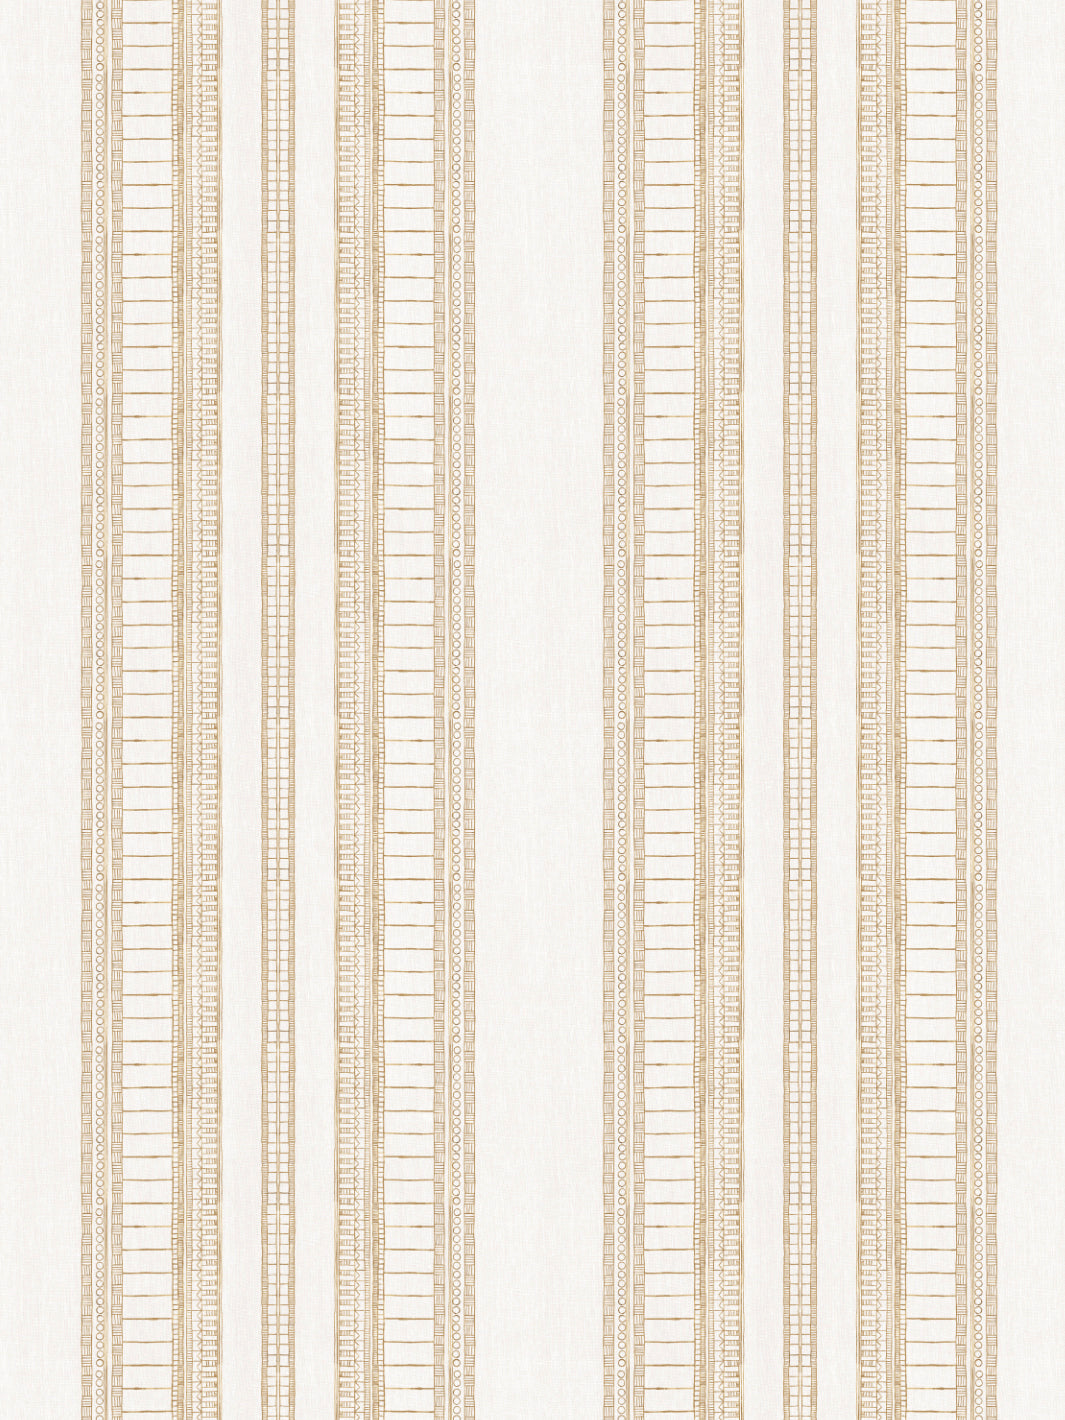 'Doodle Stripe' Wallpaper by Nathan Turner - Gold